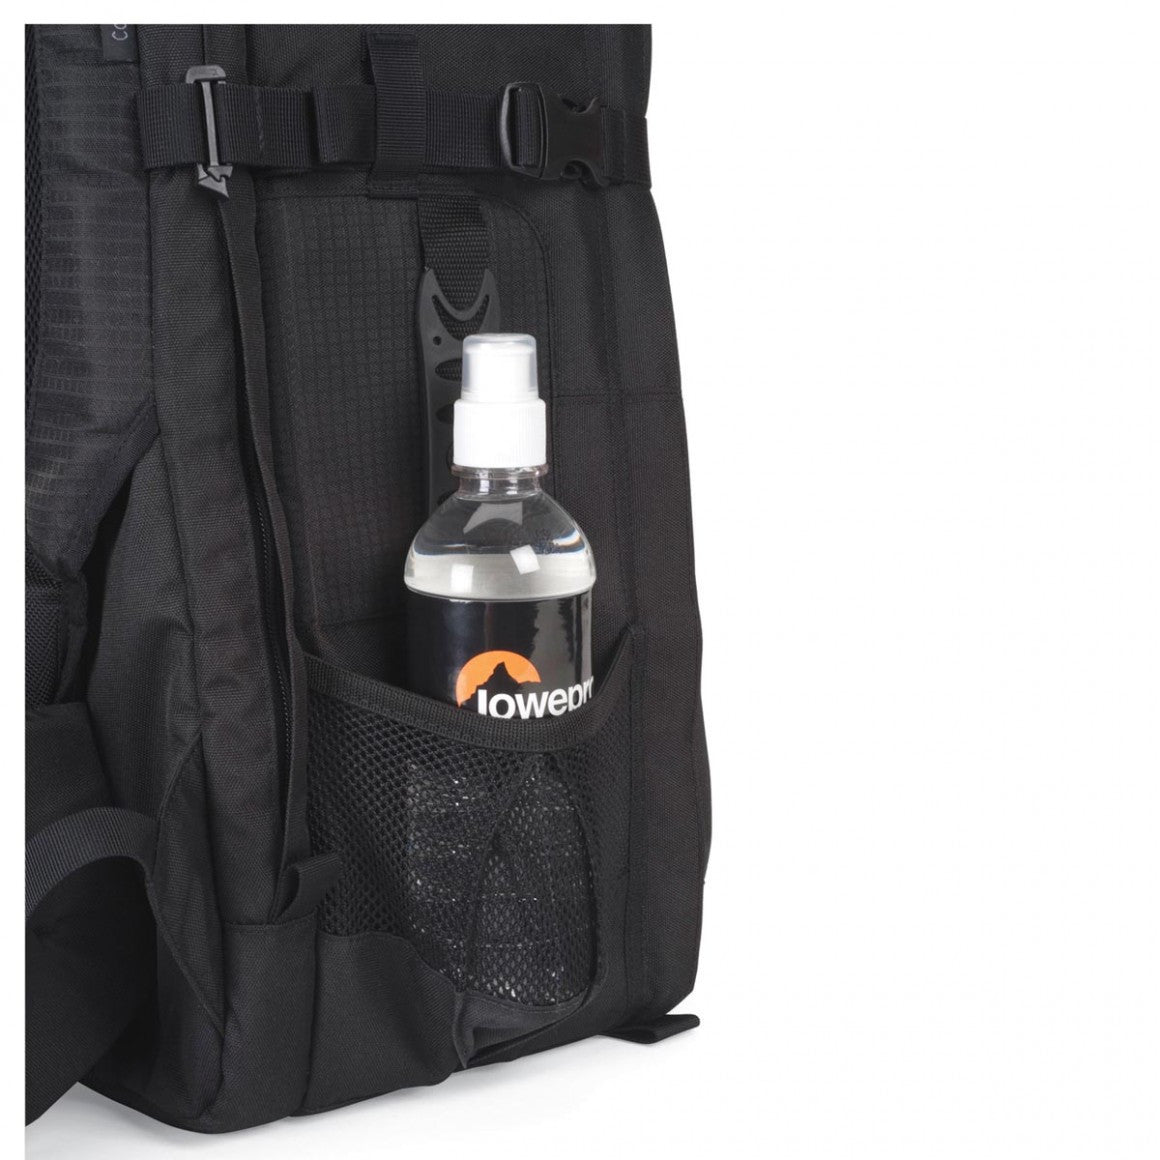 Lowepro Pro Runner 300 AW Camera Backpack (Black), bags backpacks, Lowepro - Pictureline  - 4